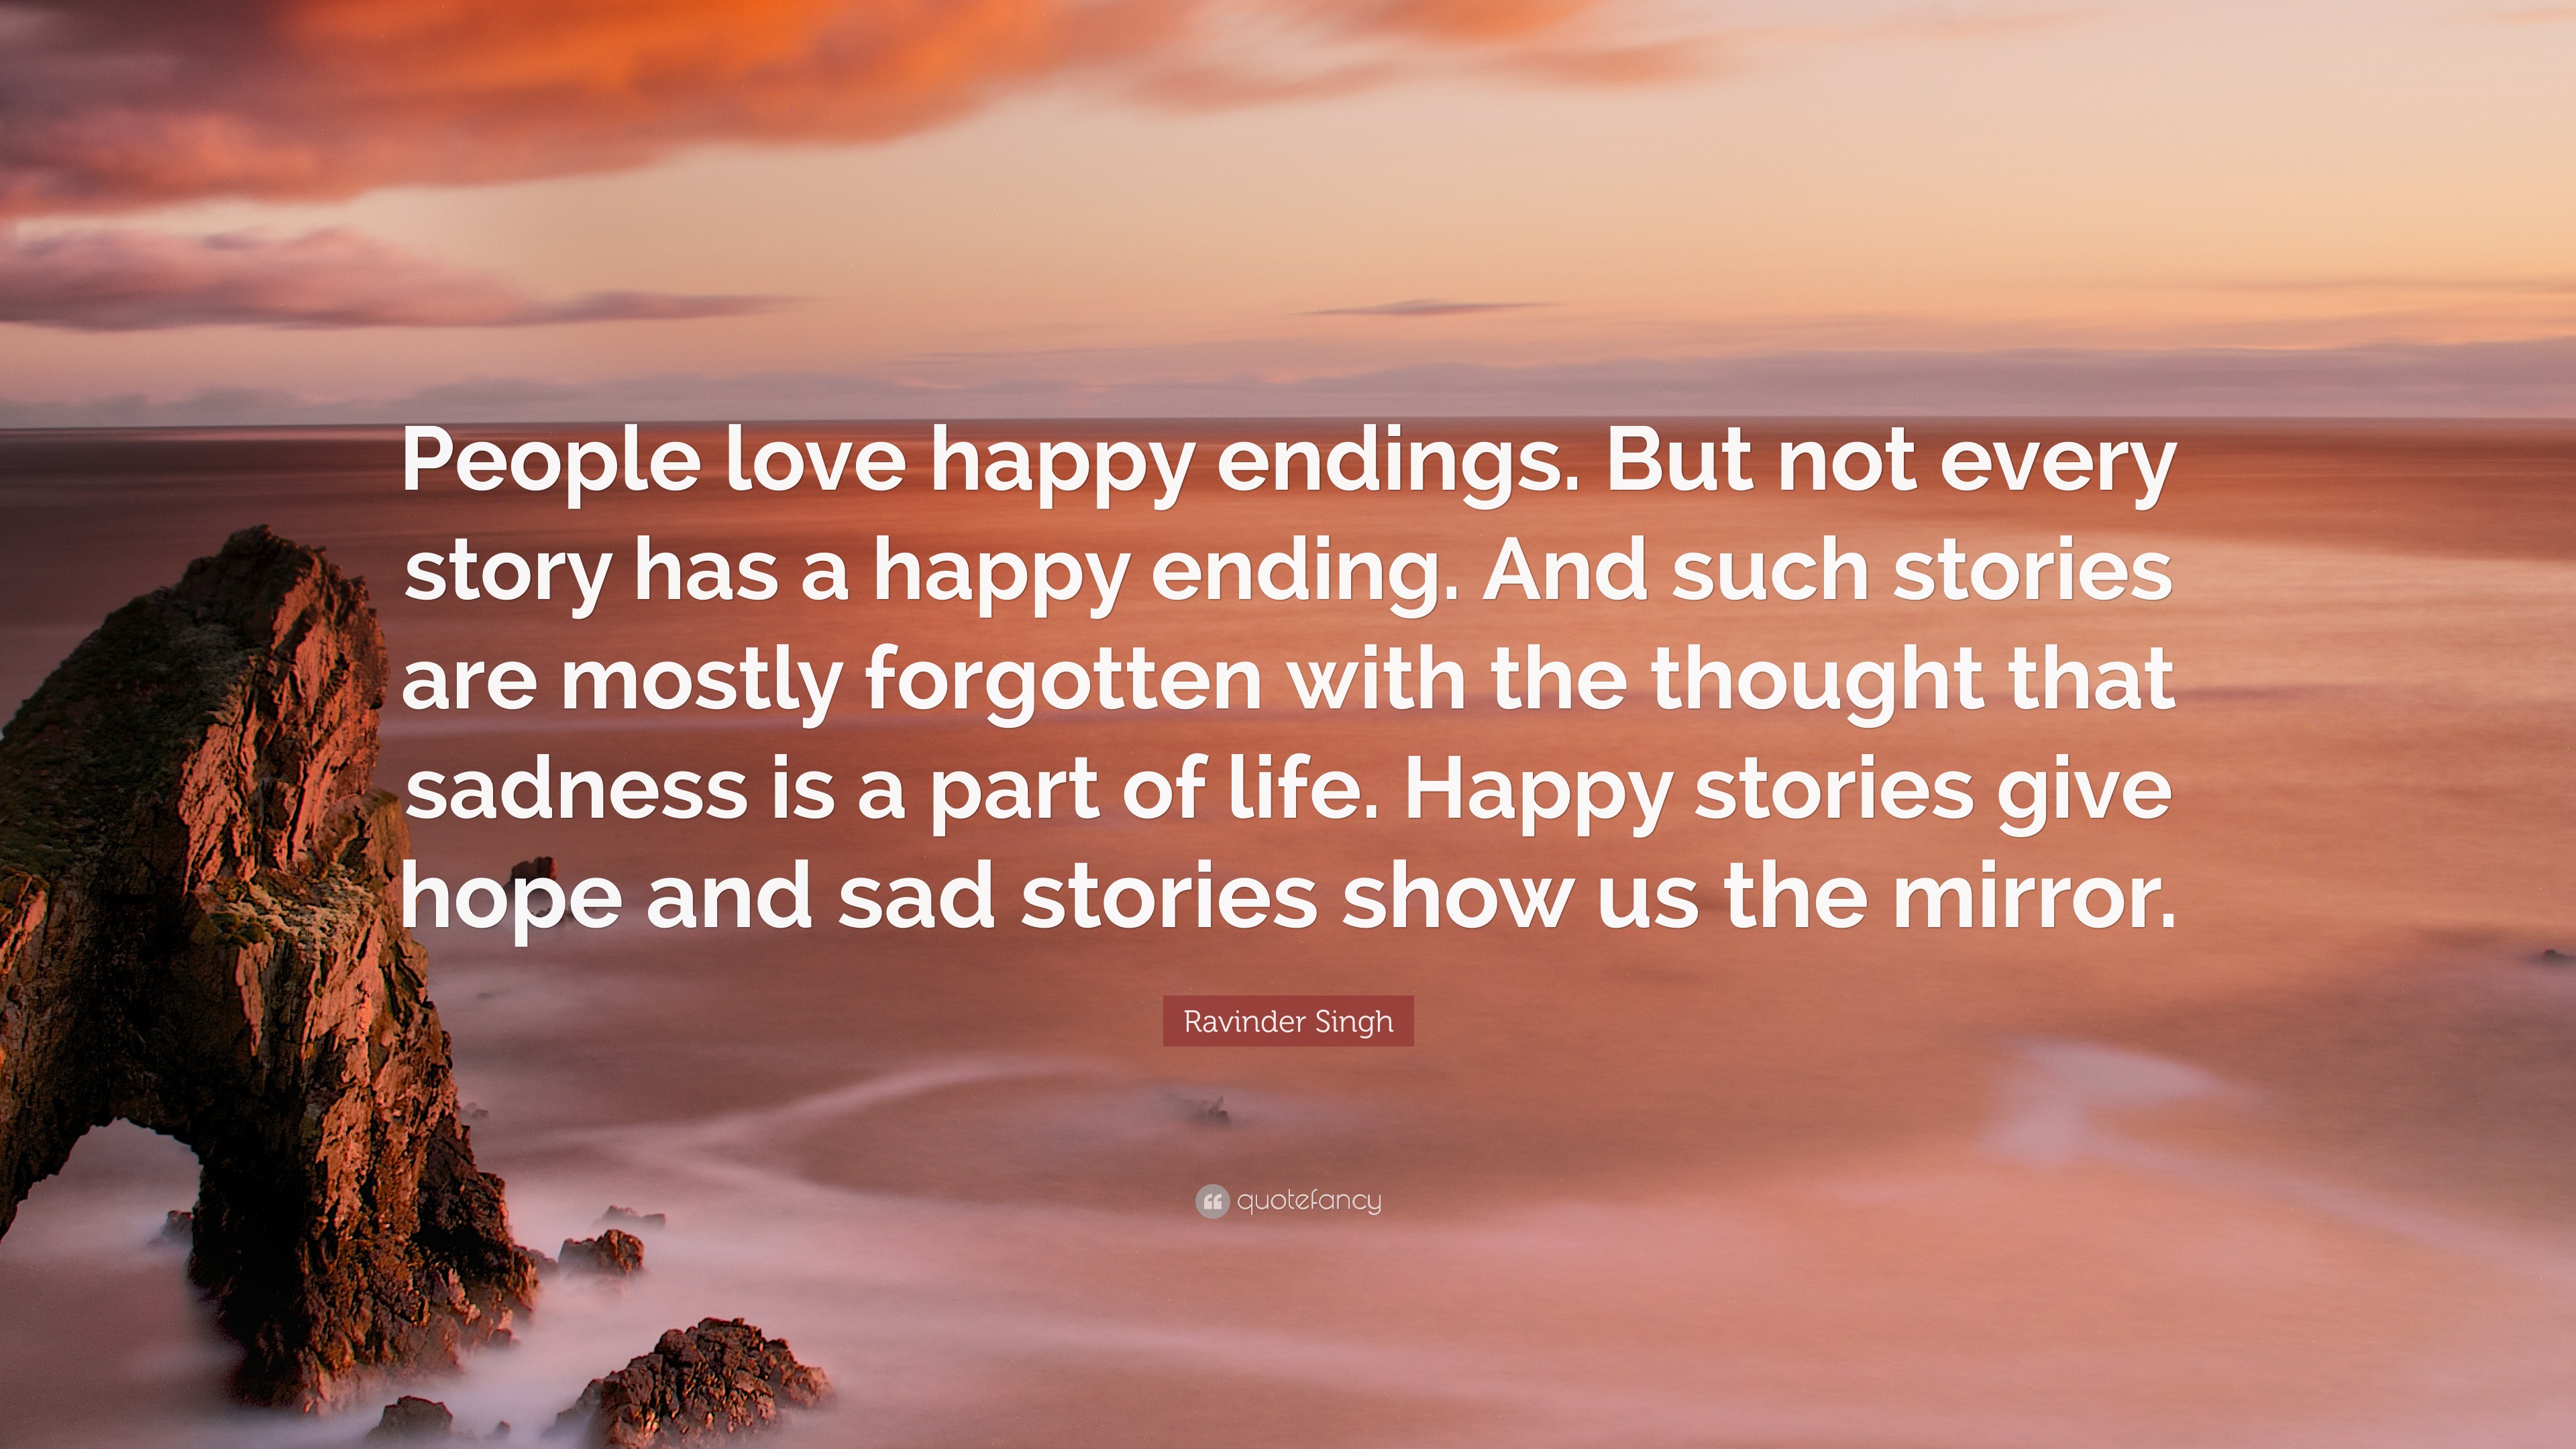 Got to love happy endings